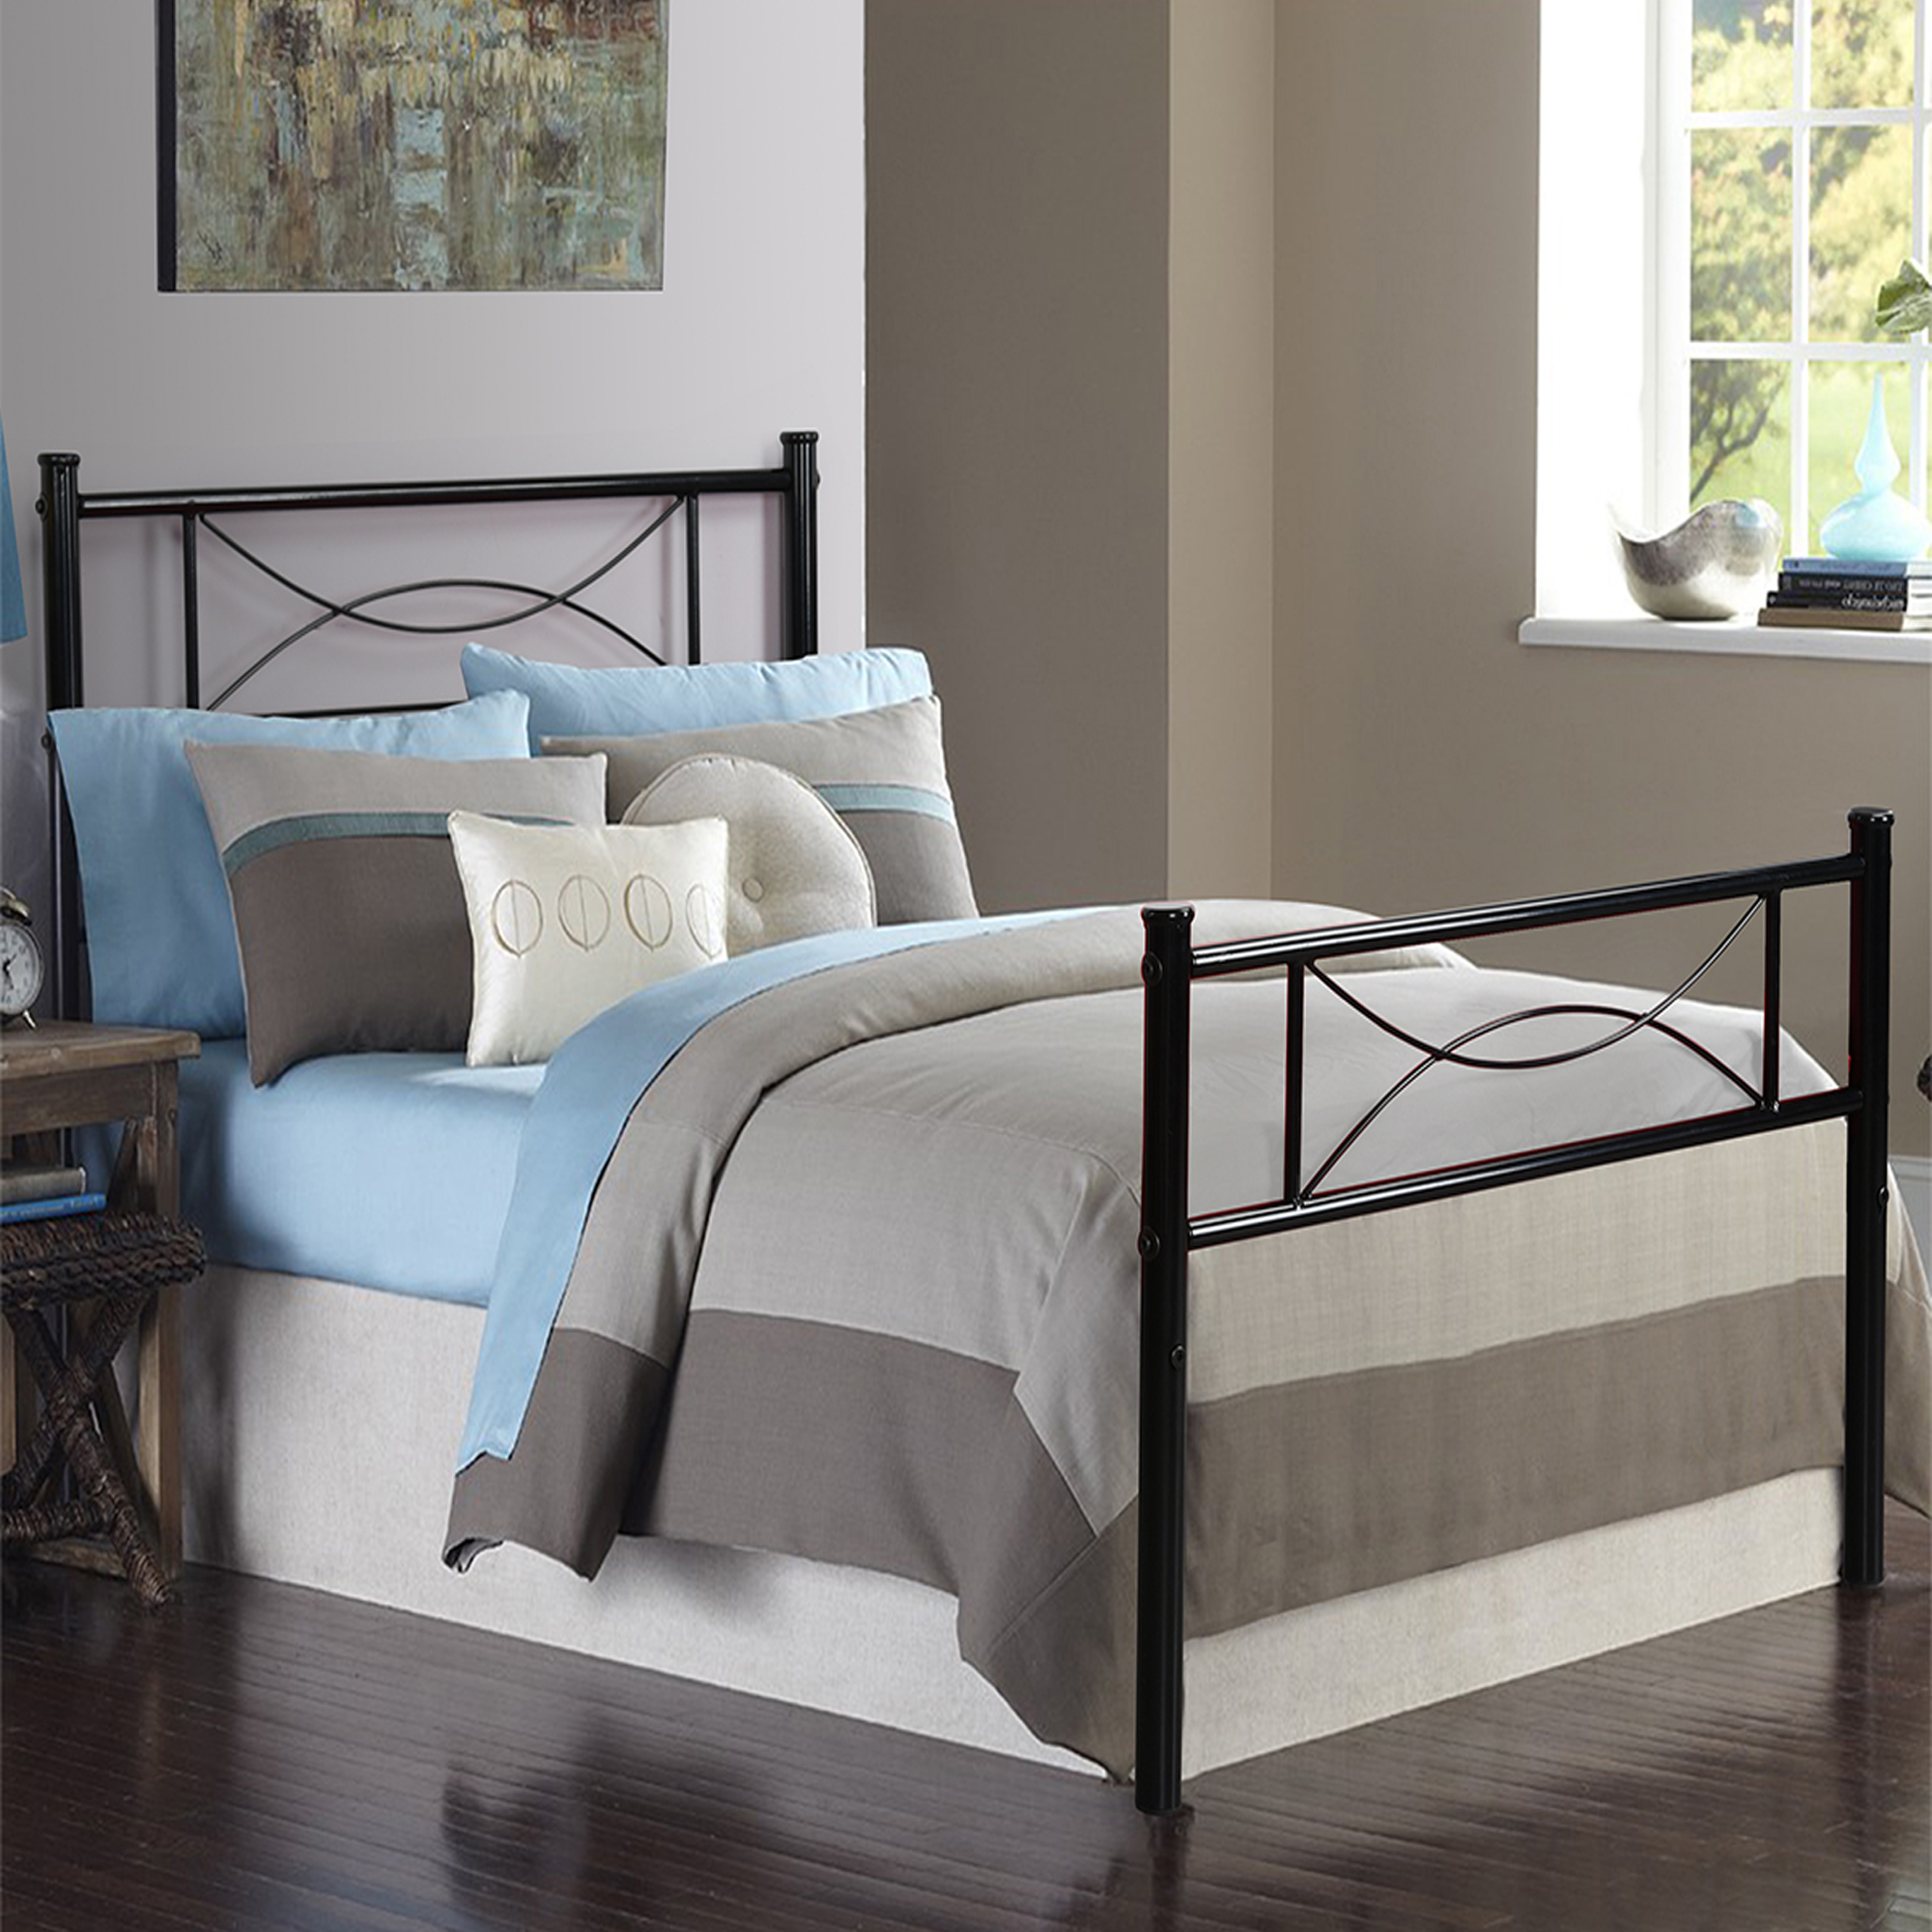 Furniture R Bedroom Metal Bed Frame, Full Size Bed Frame And Headboard